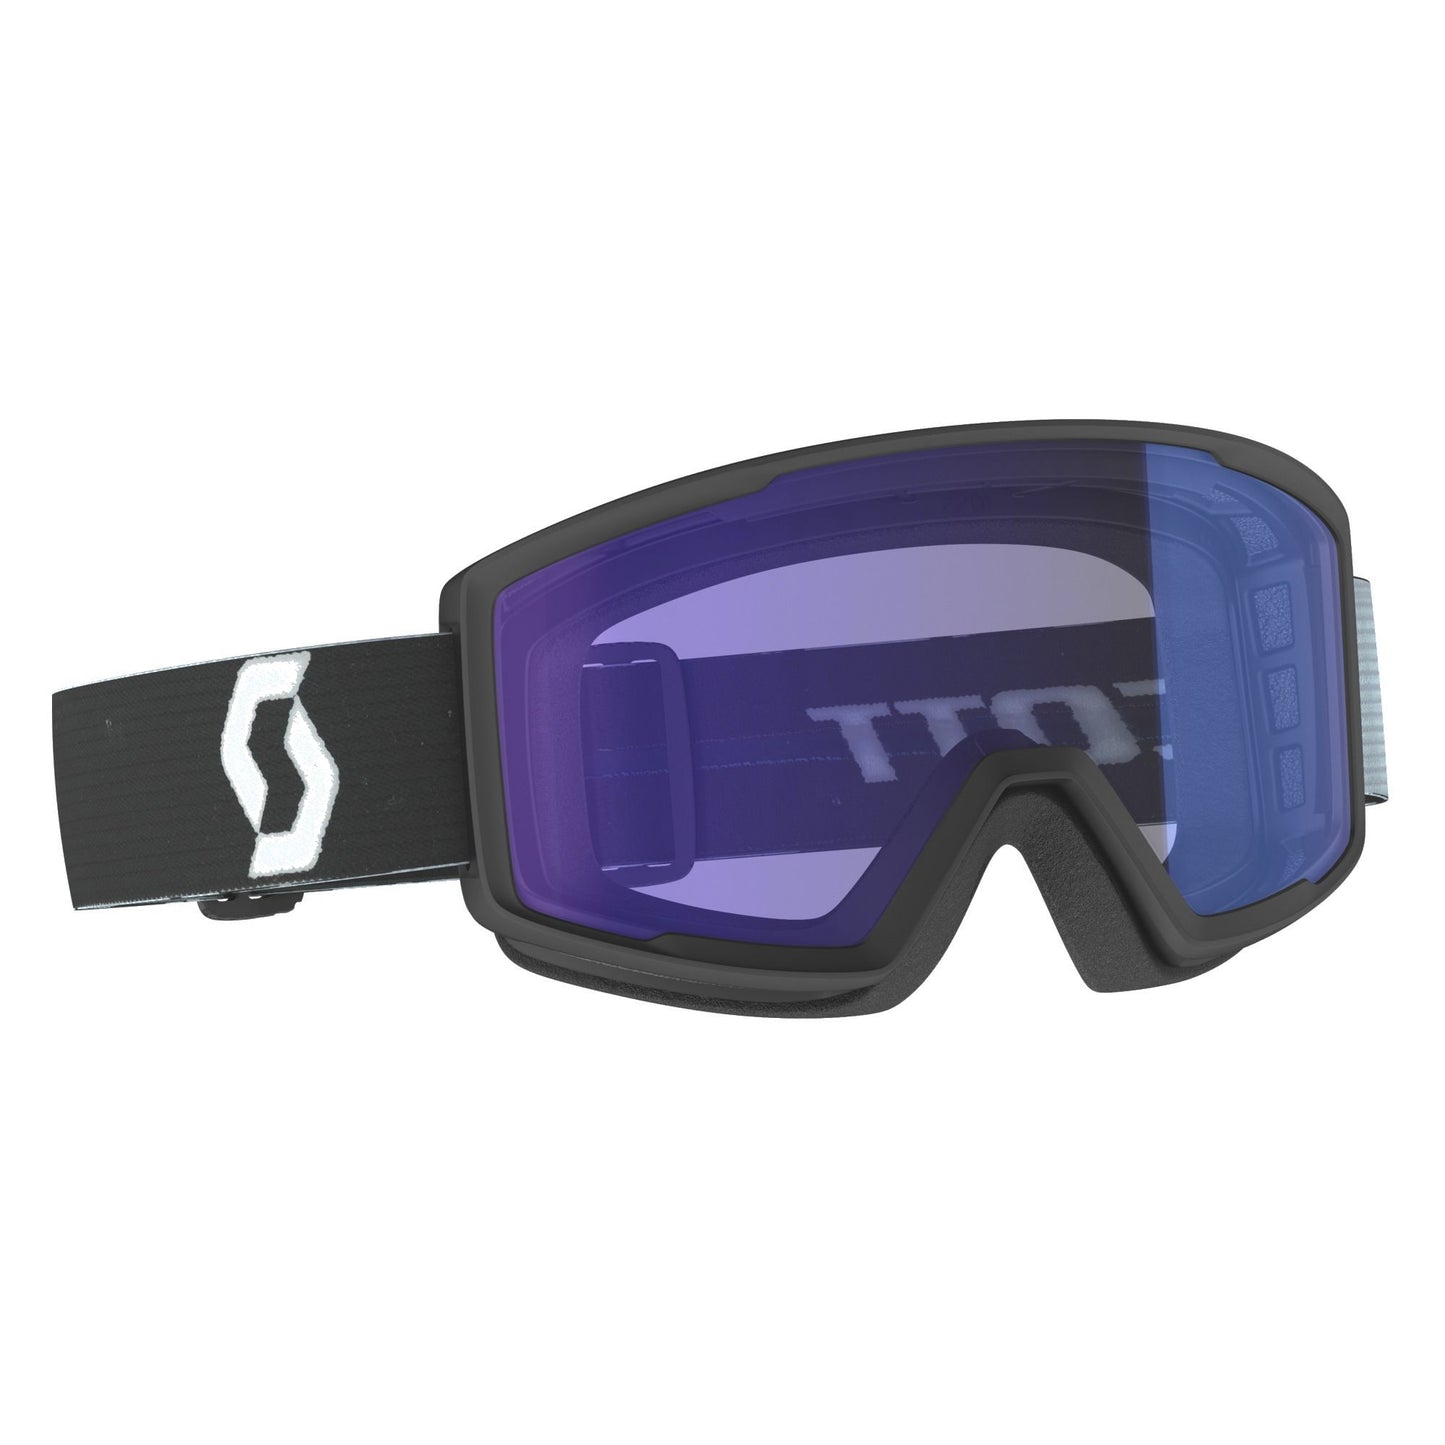 Scott Factor Pro Snow Goggle Team White/Black / Illuminator Blue Chrome Snow Goggles